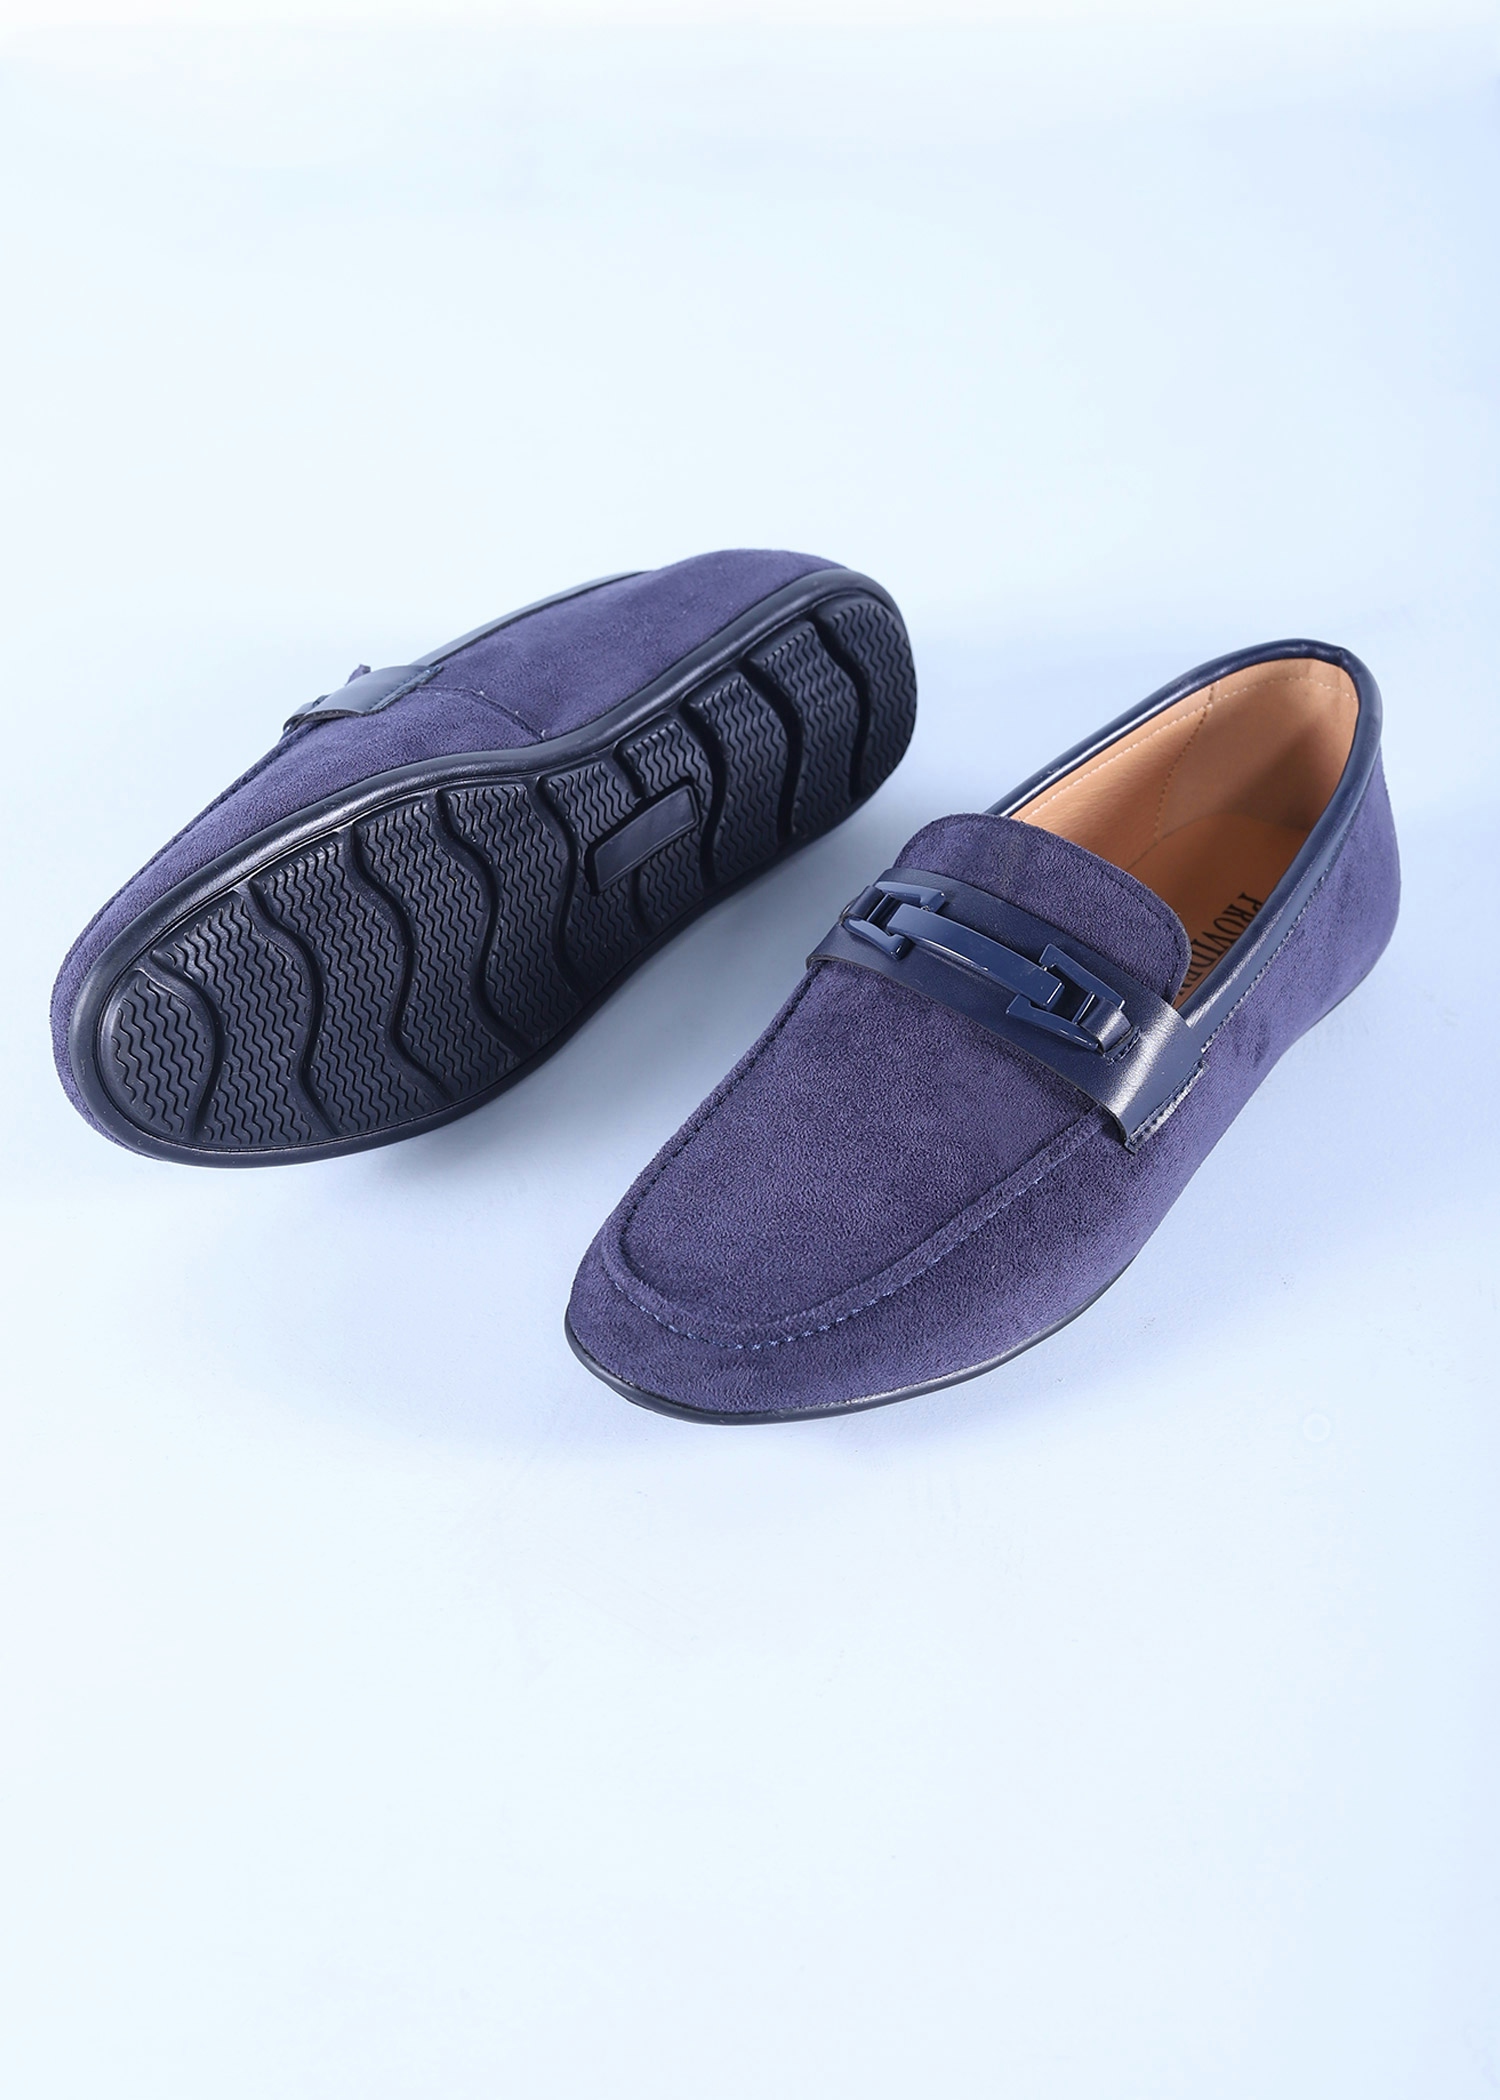 tagus mens shoes navy color sole